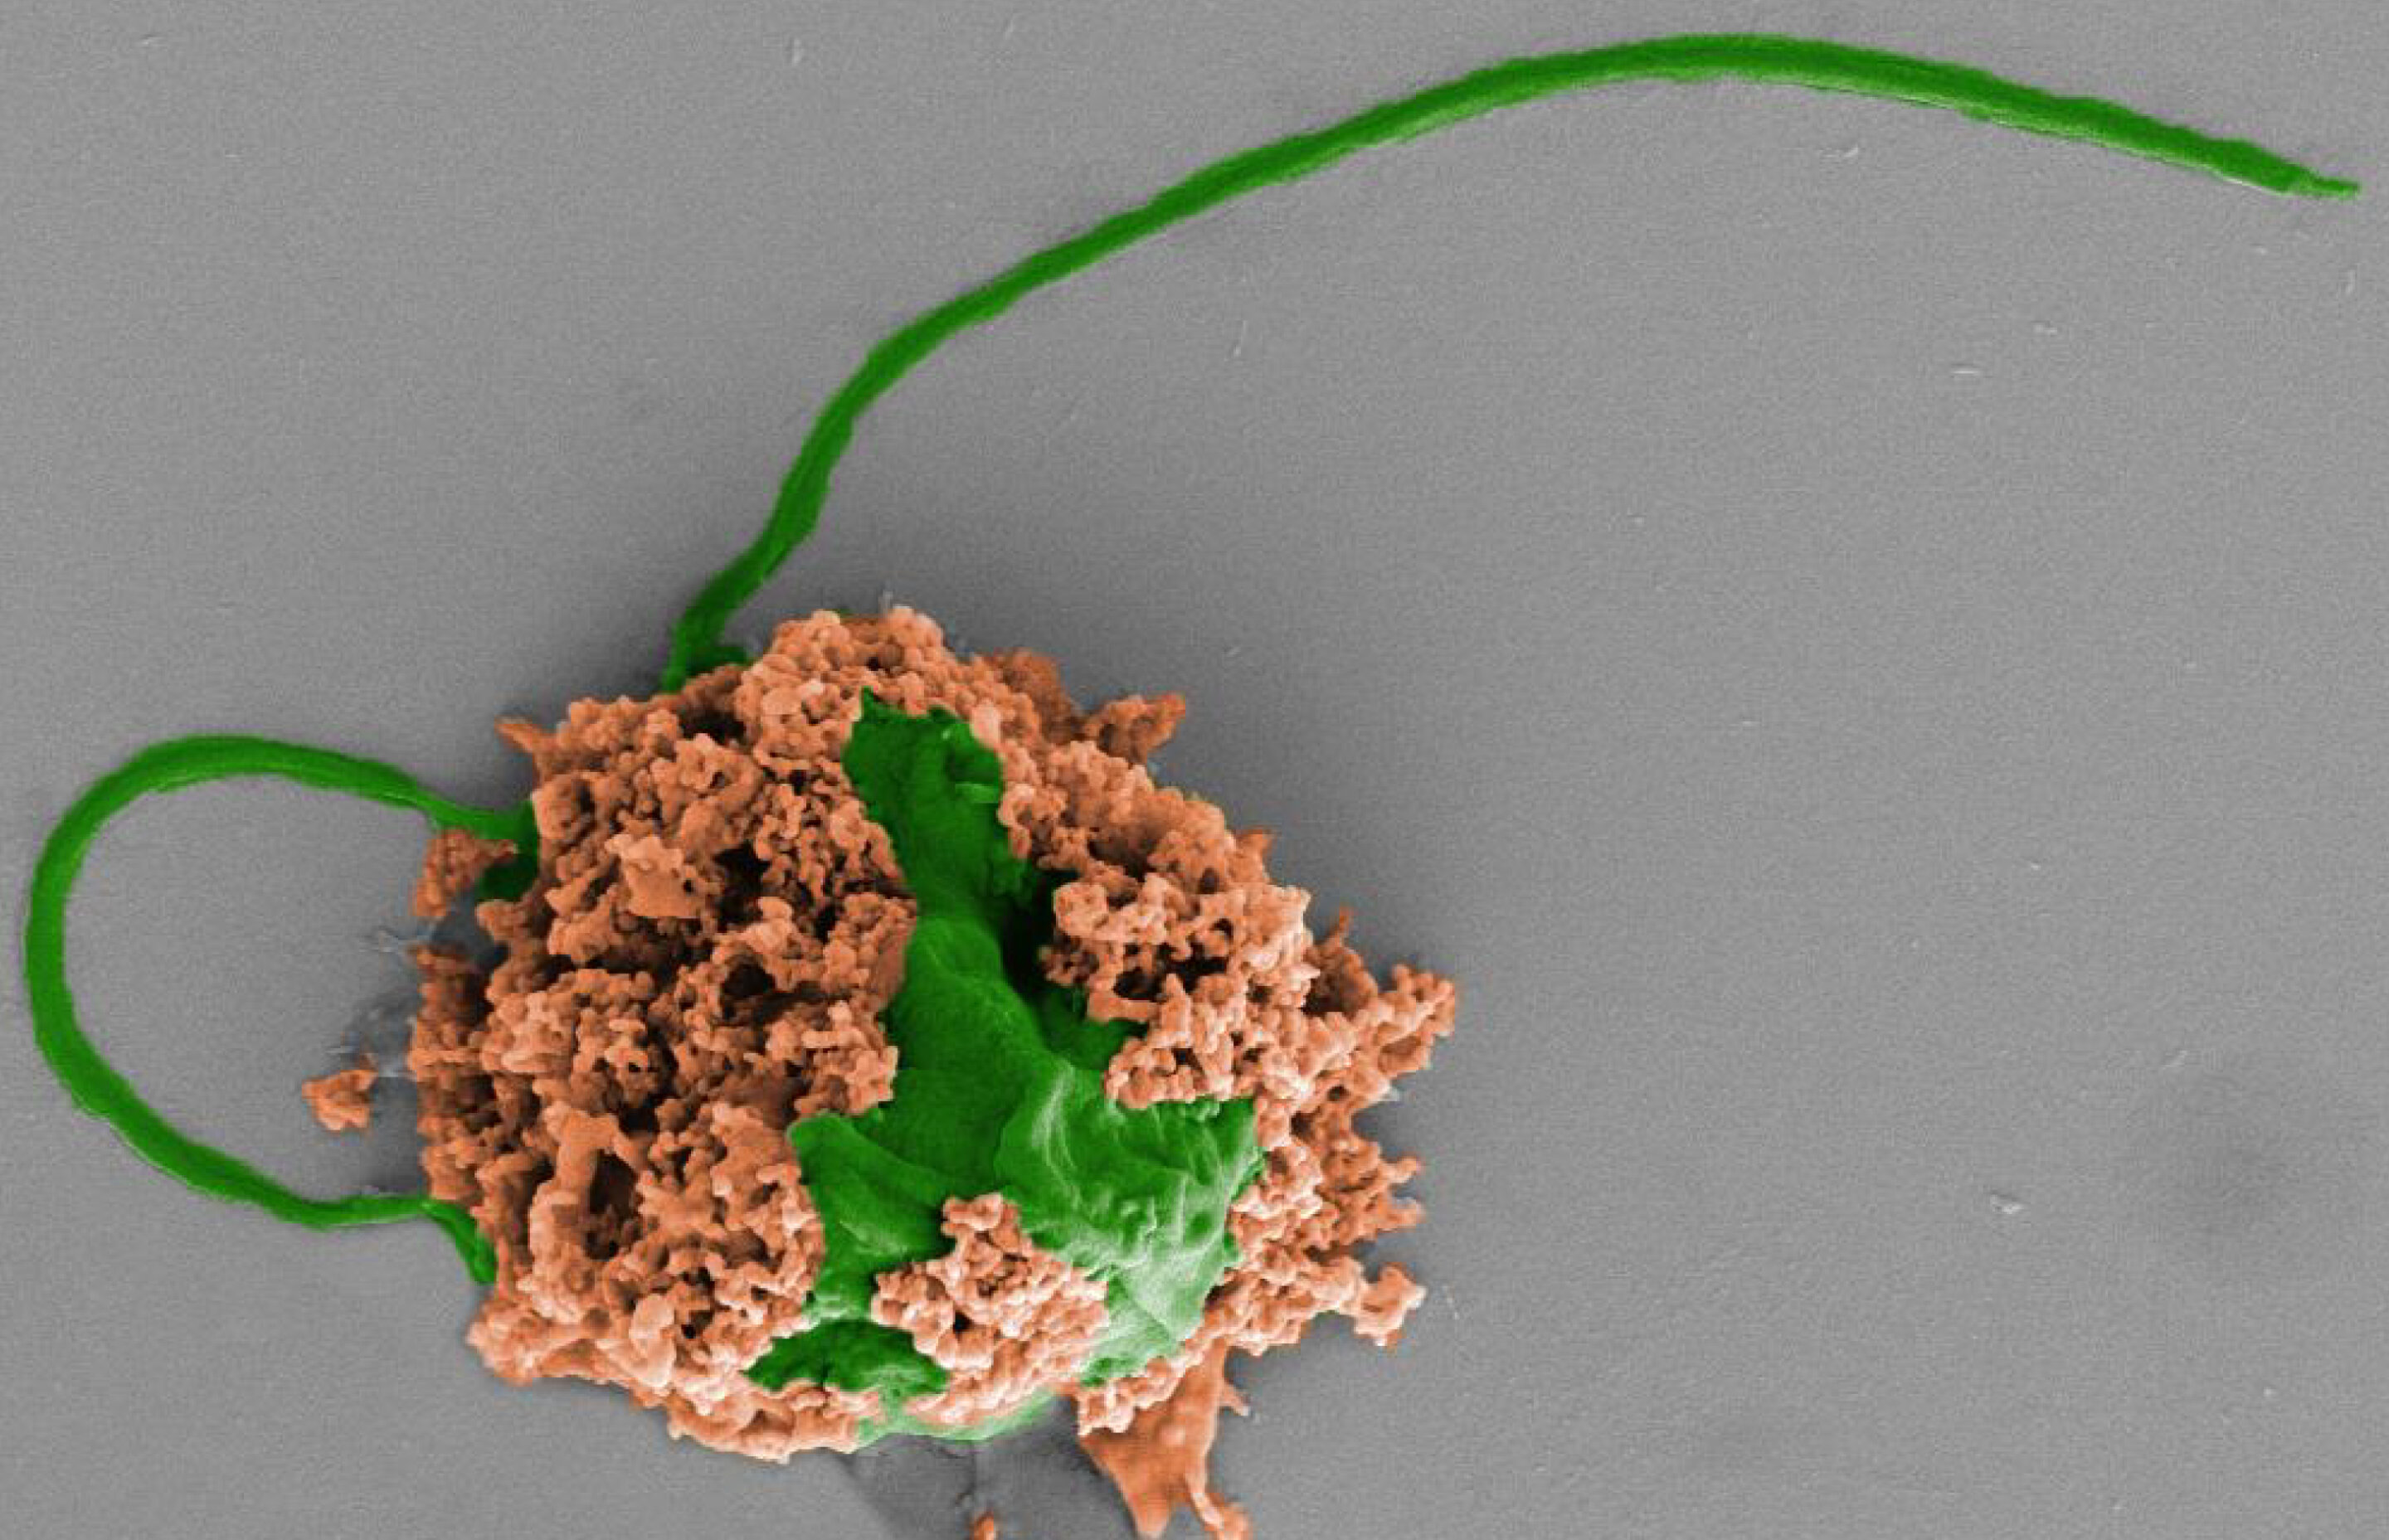 Swimming nanorobots treat deadly pneumonia in mice